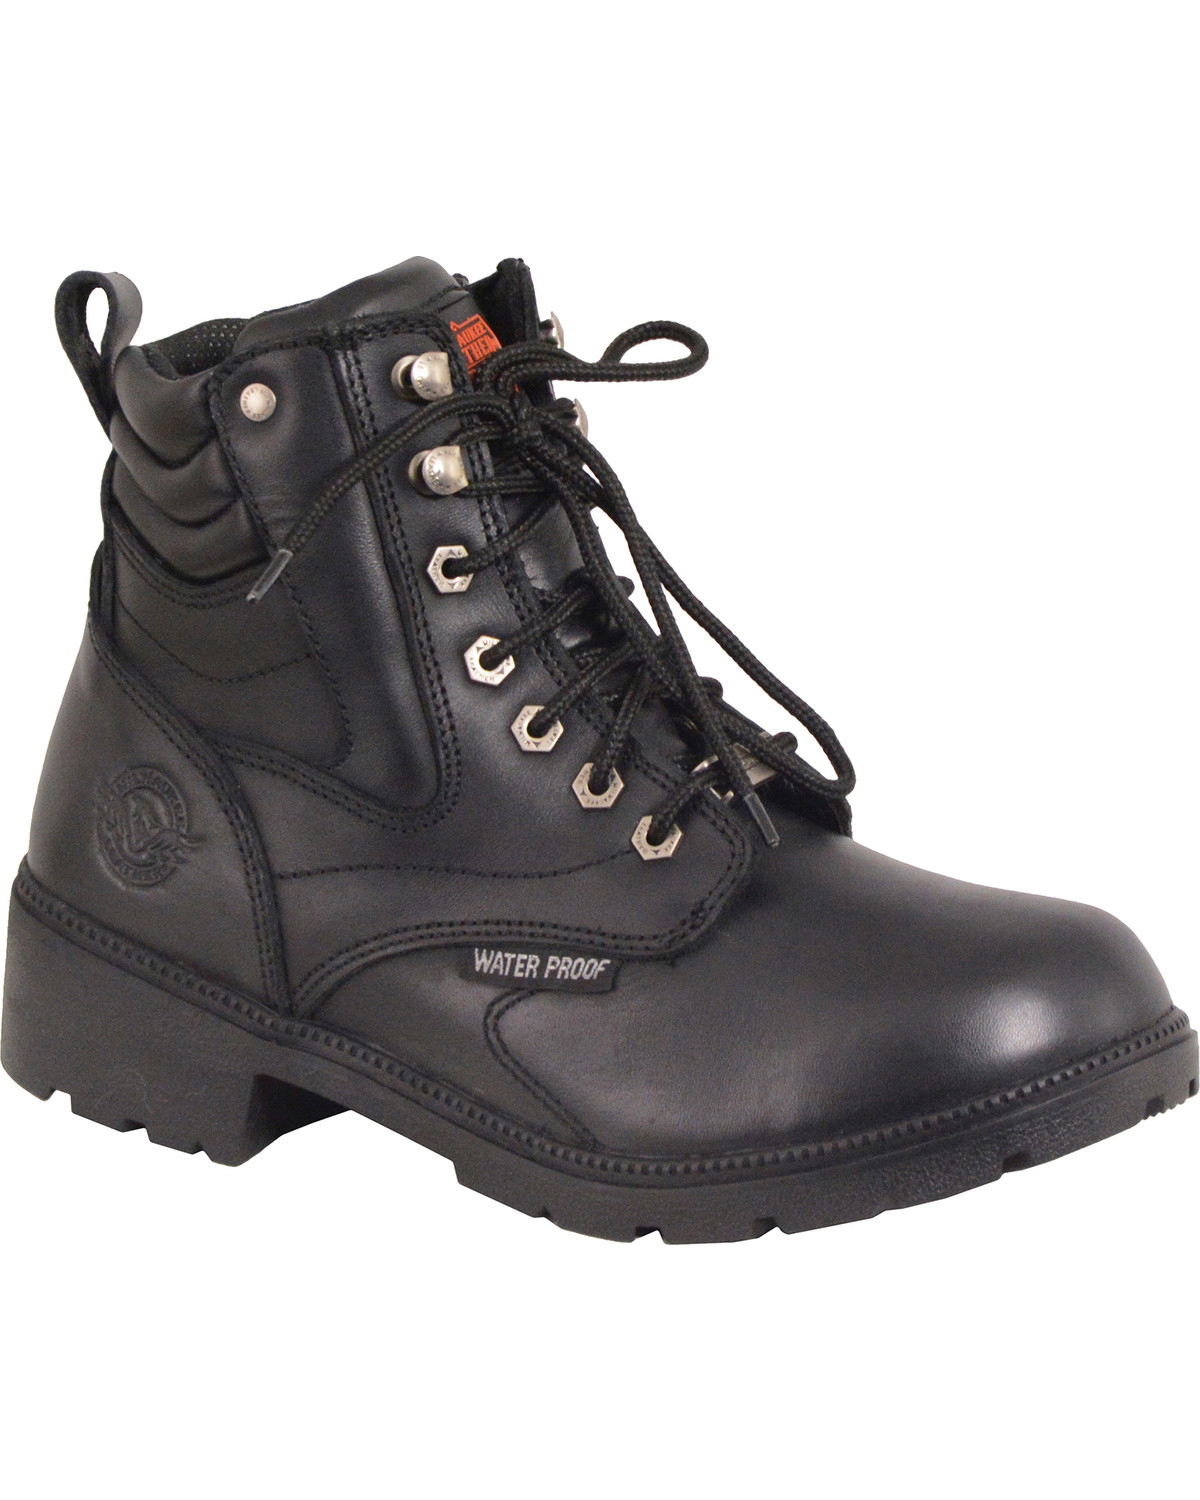 women's work boots with zipper